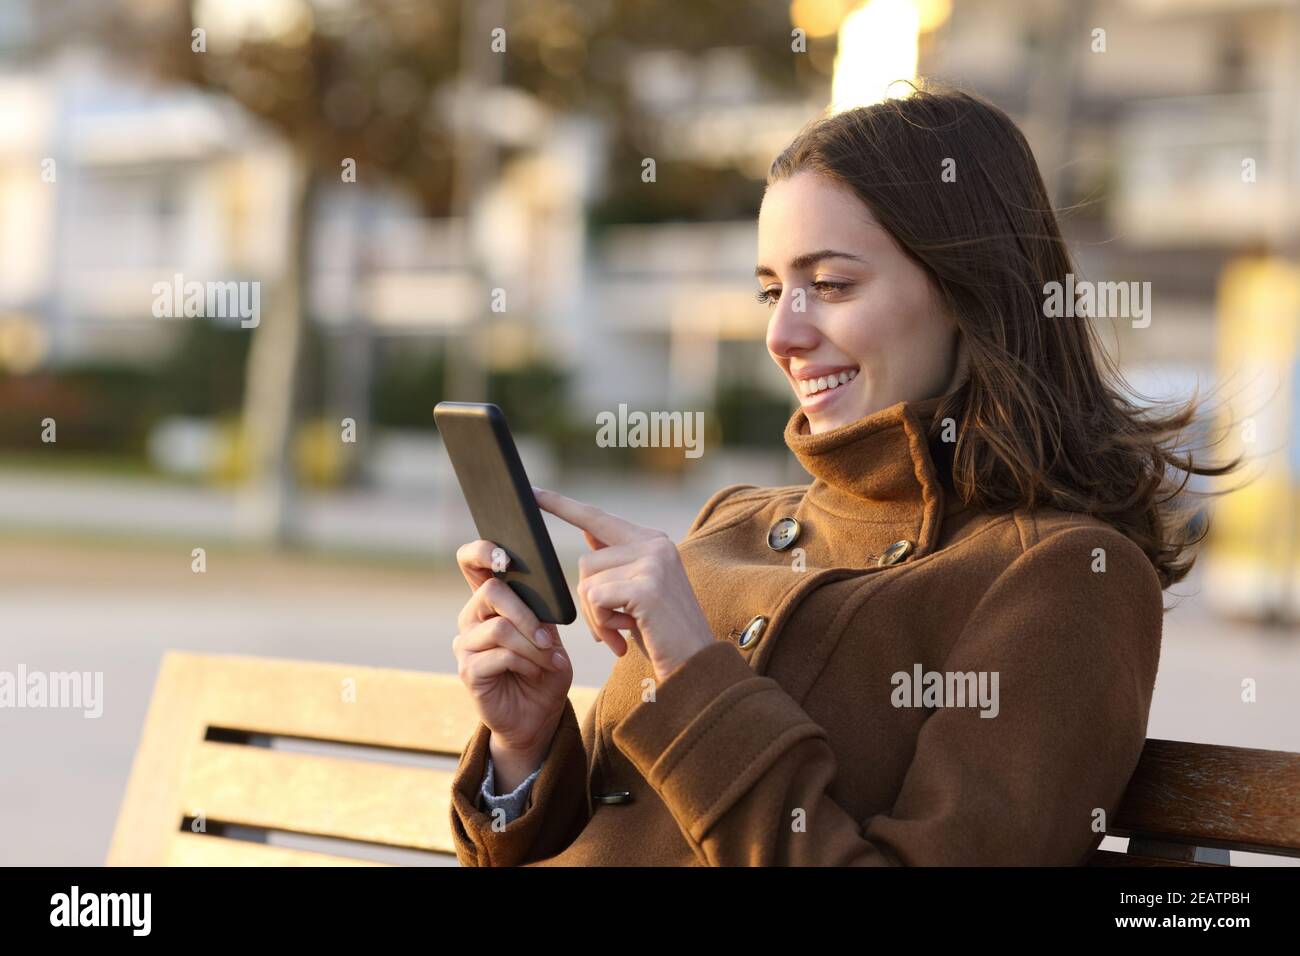 Donna felice in inverno con smartphone su una panca Foto Stock